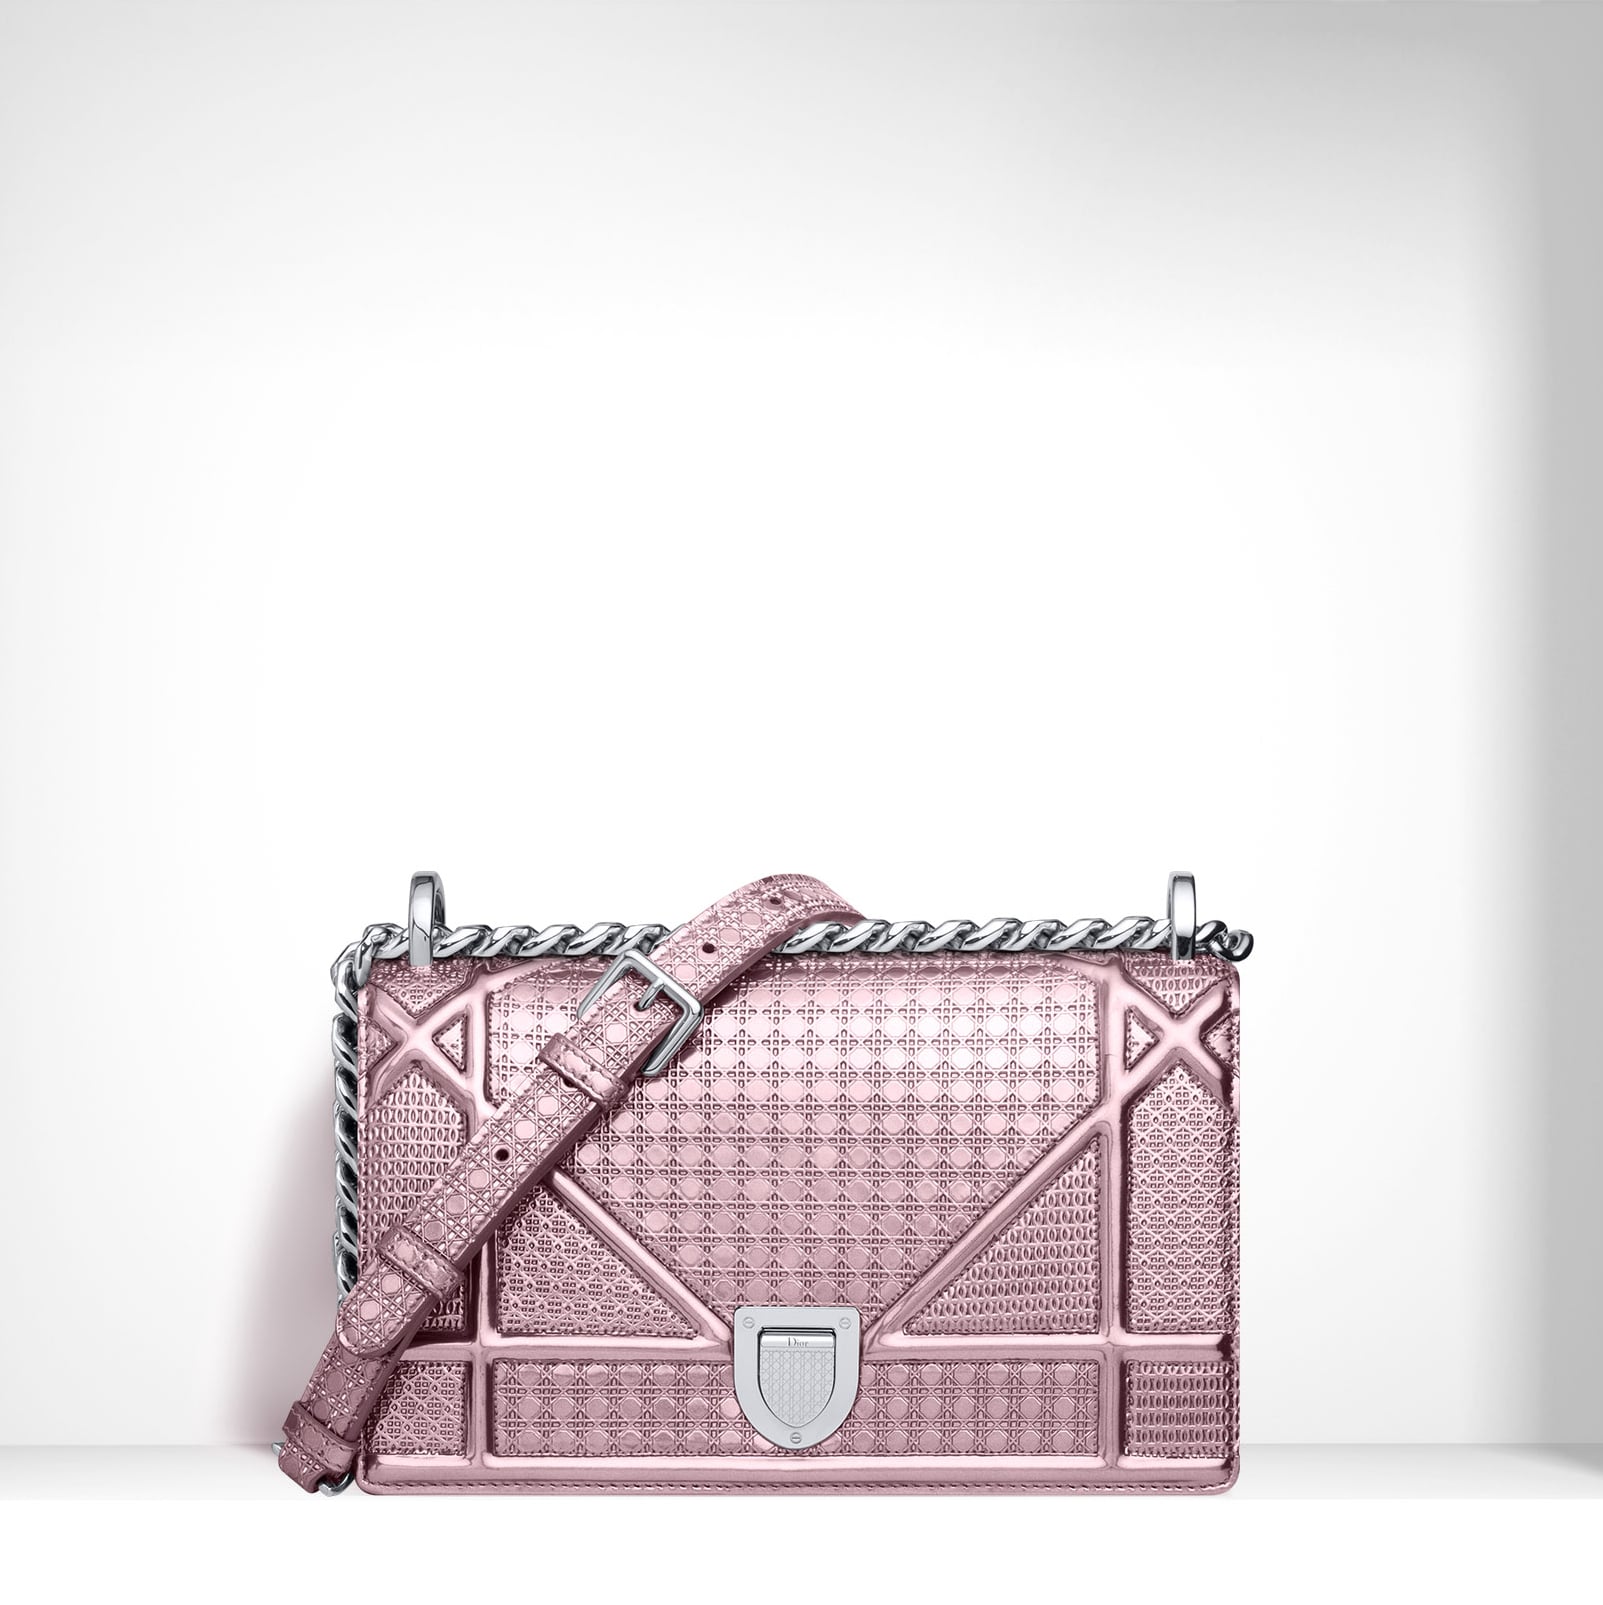 Dior Diorama - Small, Black Calfskin  Diorama bag, Bags, Purses and  handbags